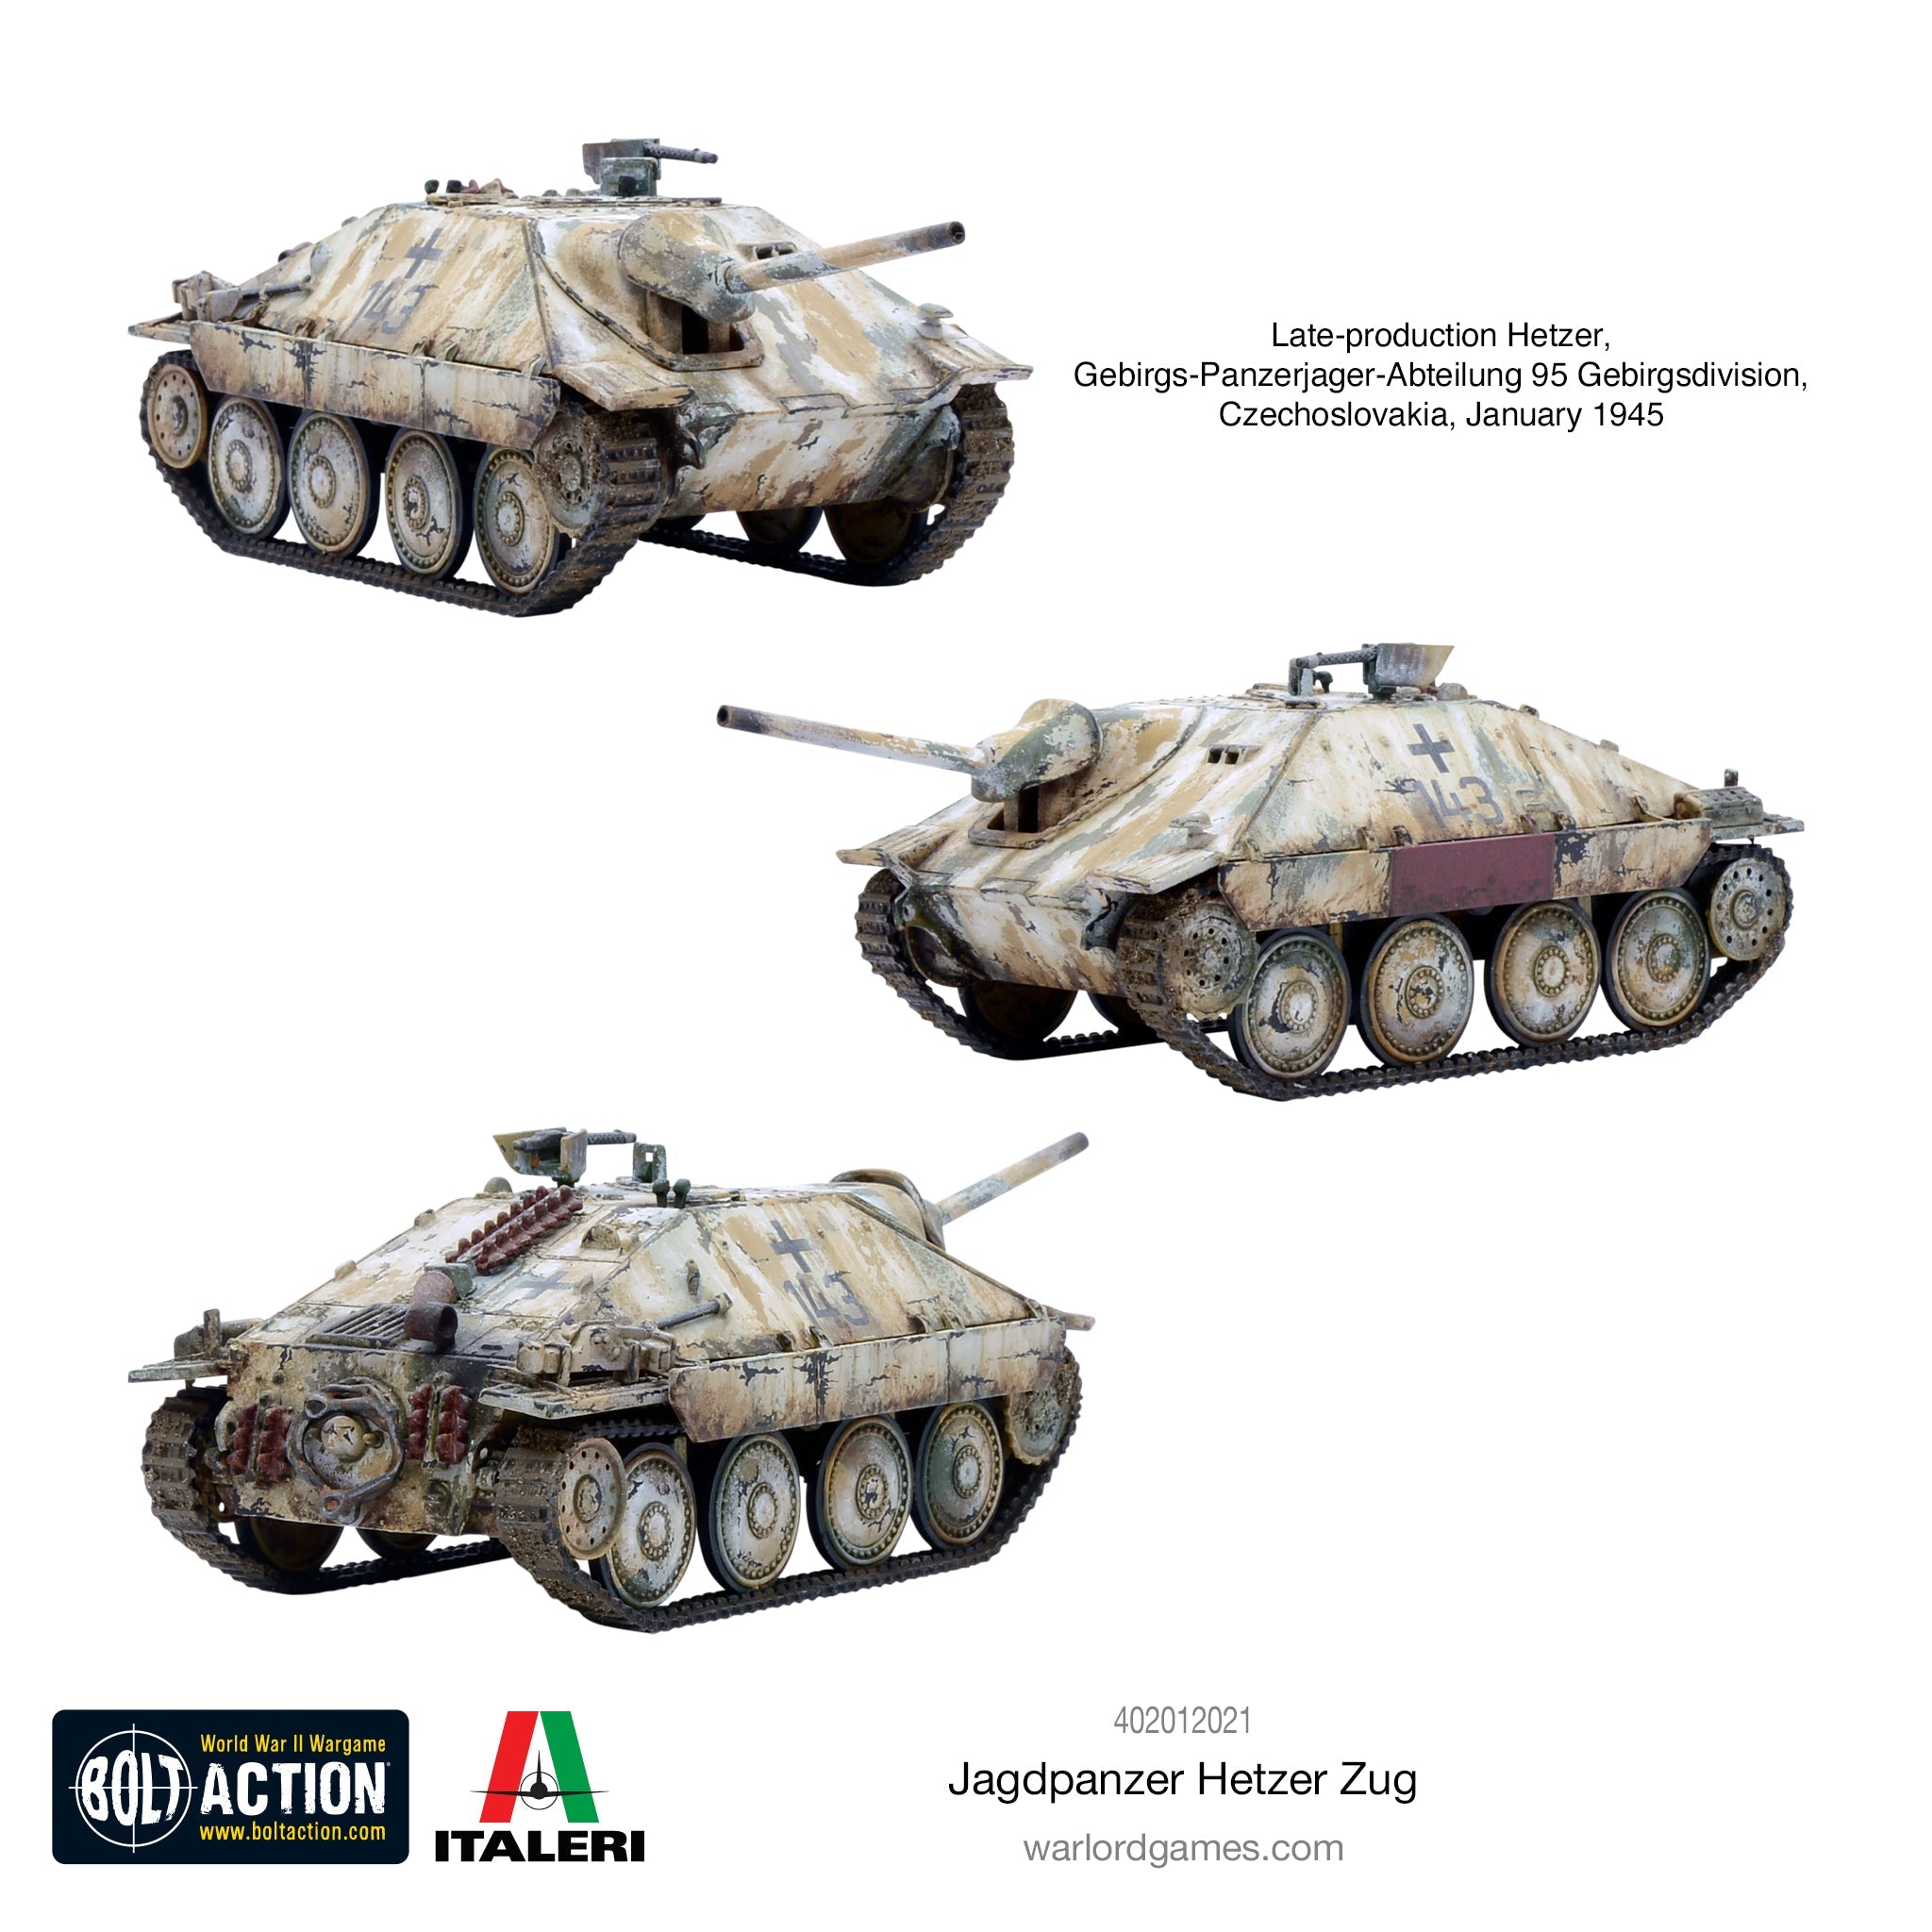 Jagdpanzer Hetzer zug